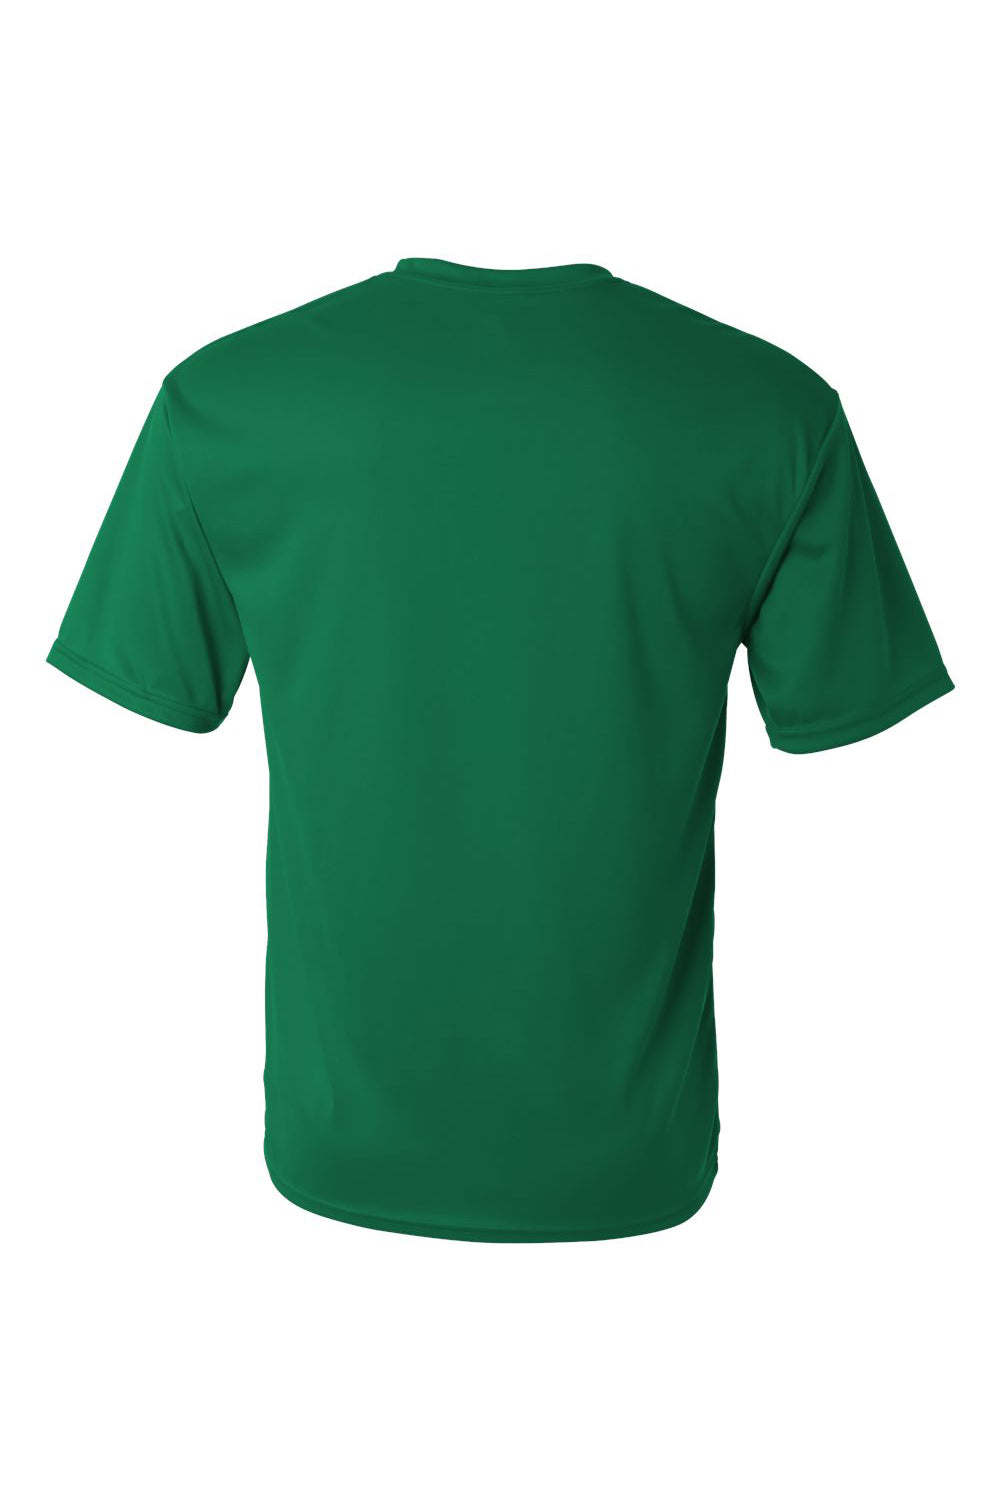 C2 Sport 5100 Mens Performance Moisture Wicking Short Sleeve Crewneck T-Shirt Kelly Green Flat Back